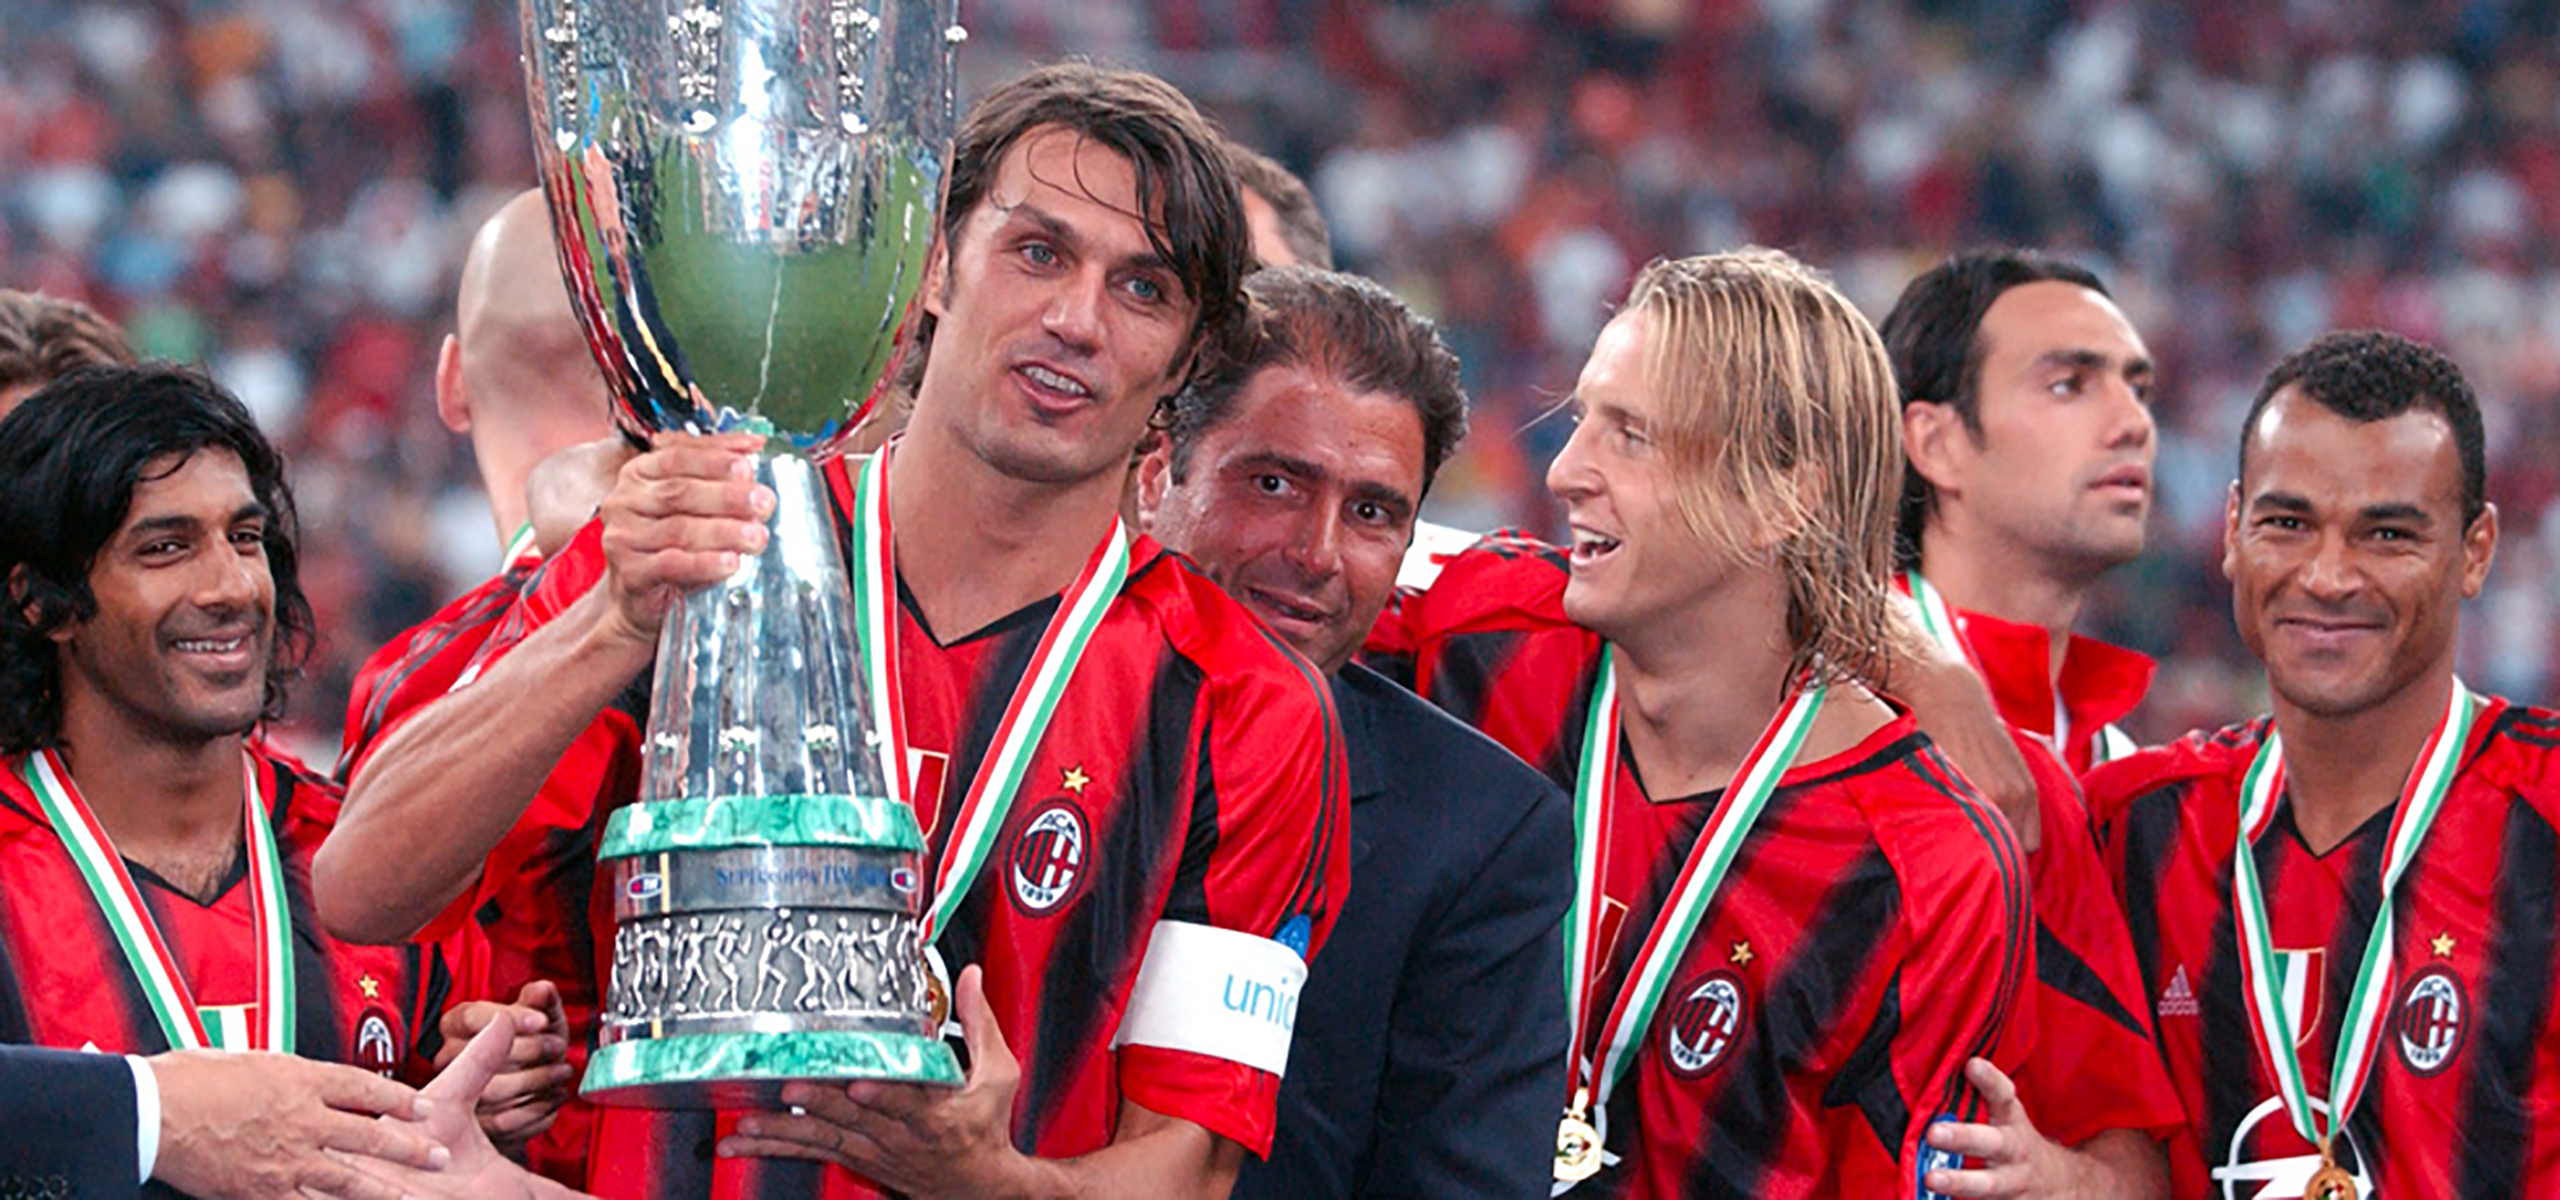 2004 Italian Super Cup: all details | AC Milan